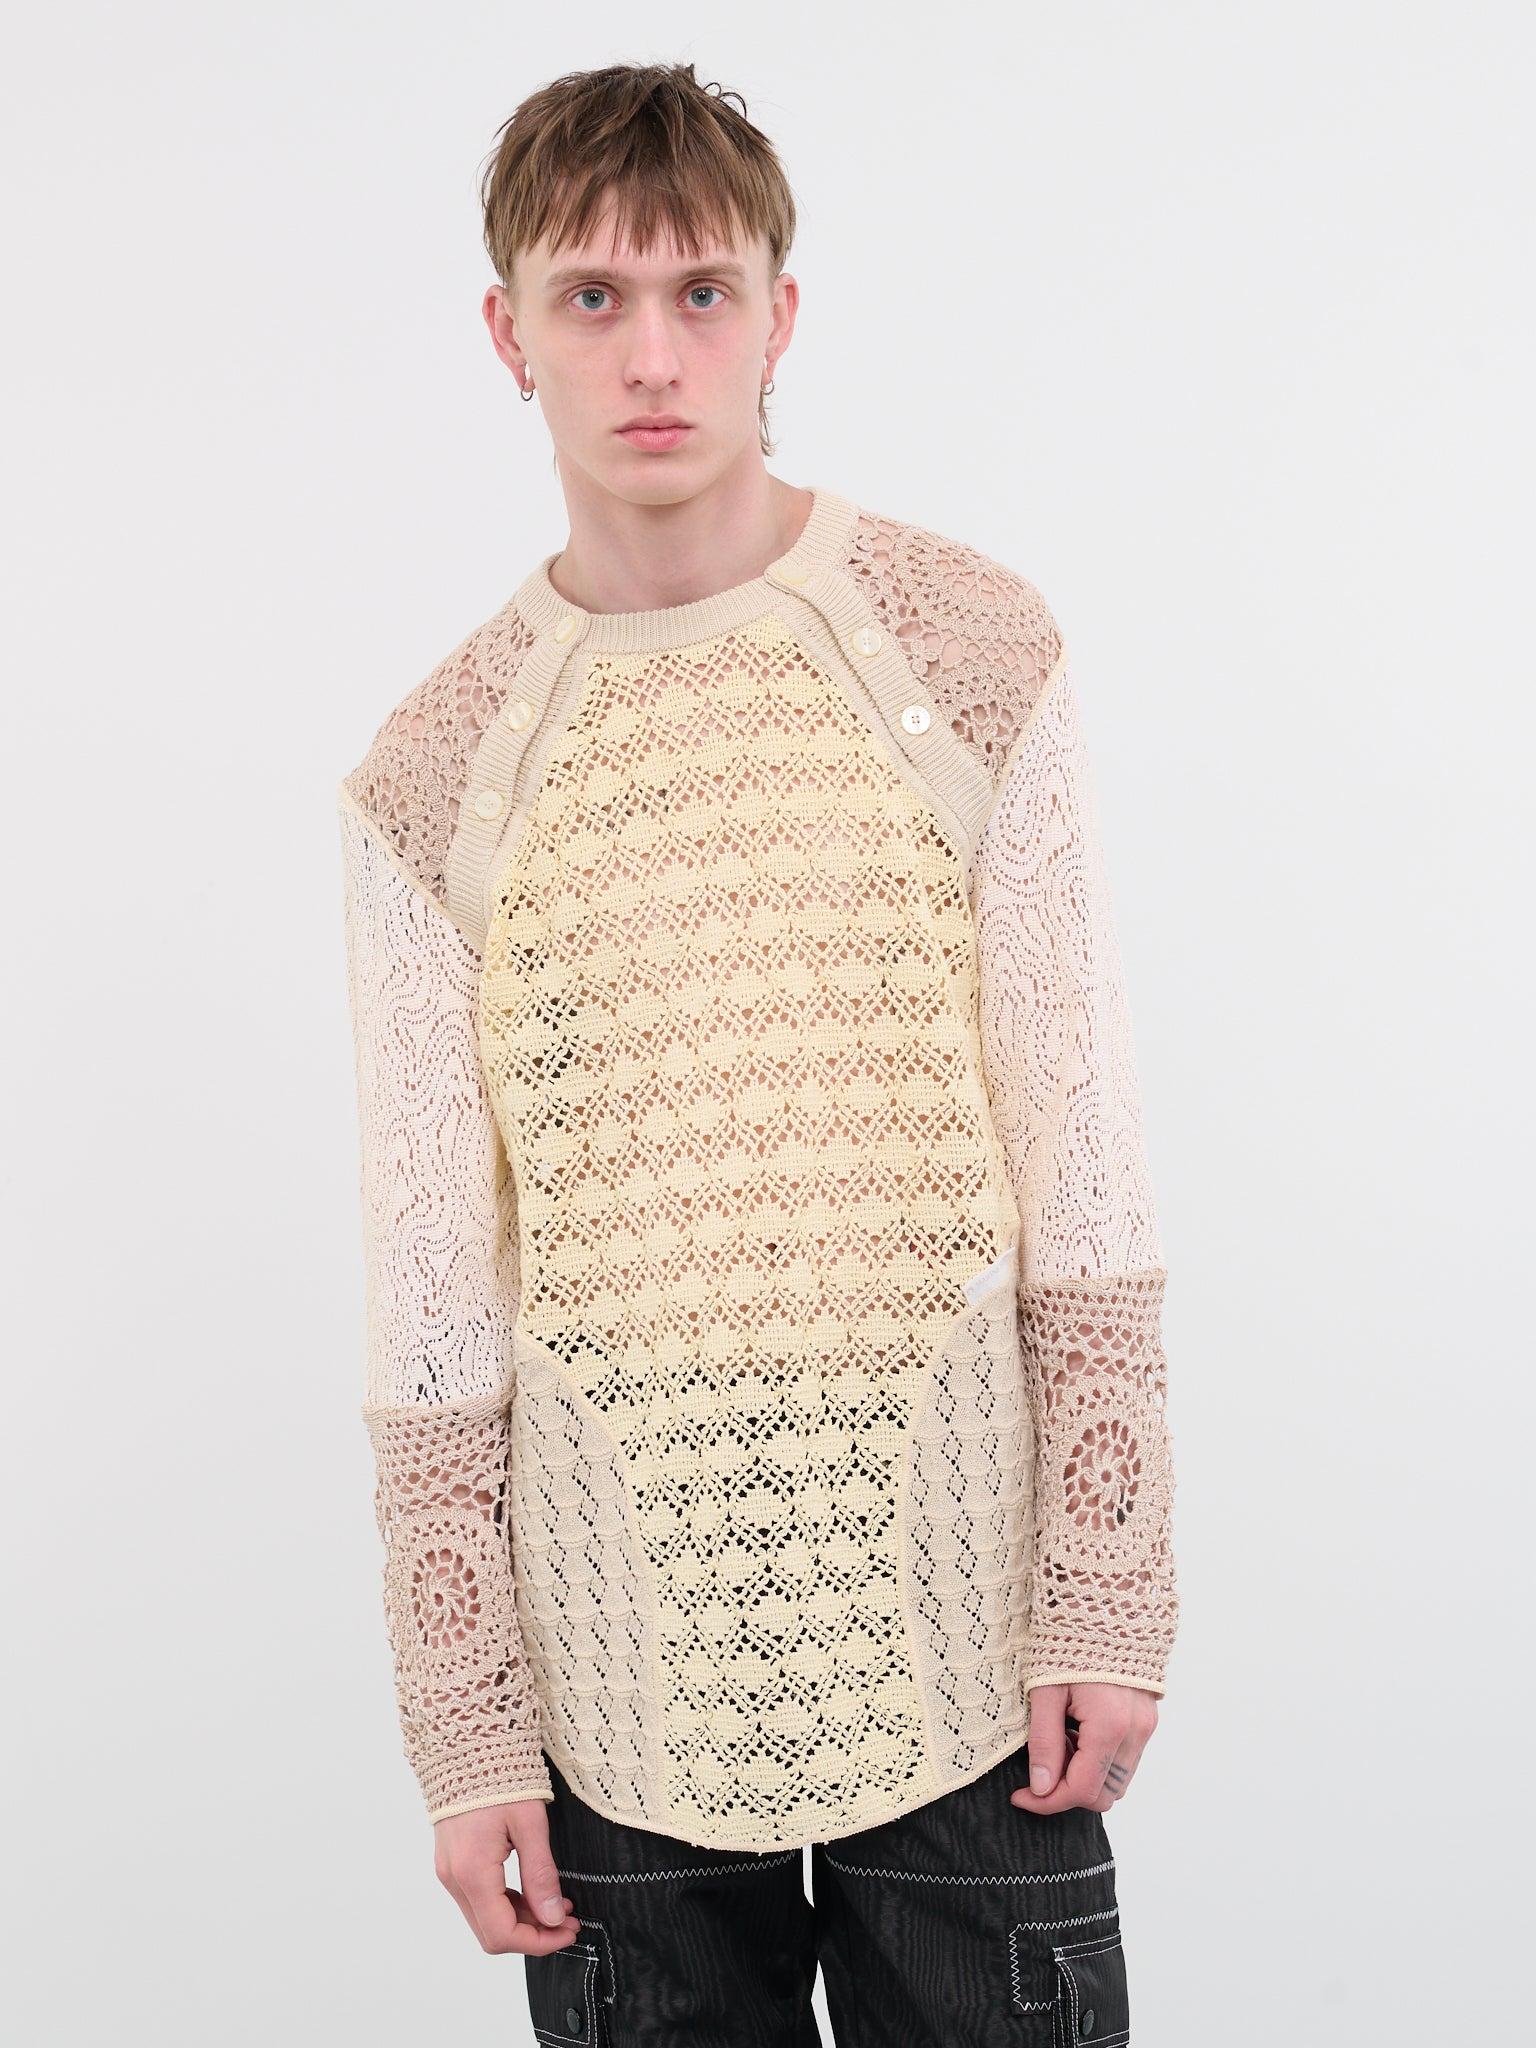 Marine Serre Regenerated Crochet Sweater in Natural for Men | Lyst